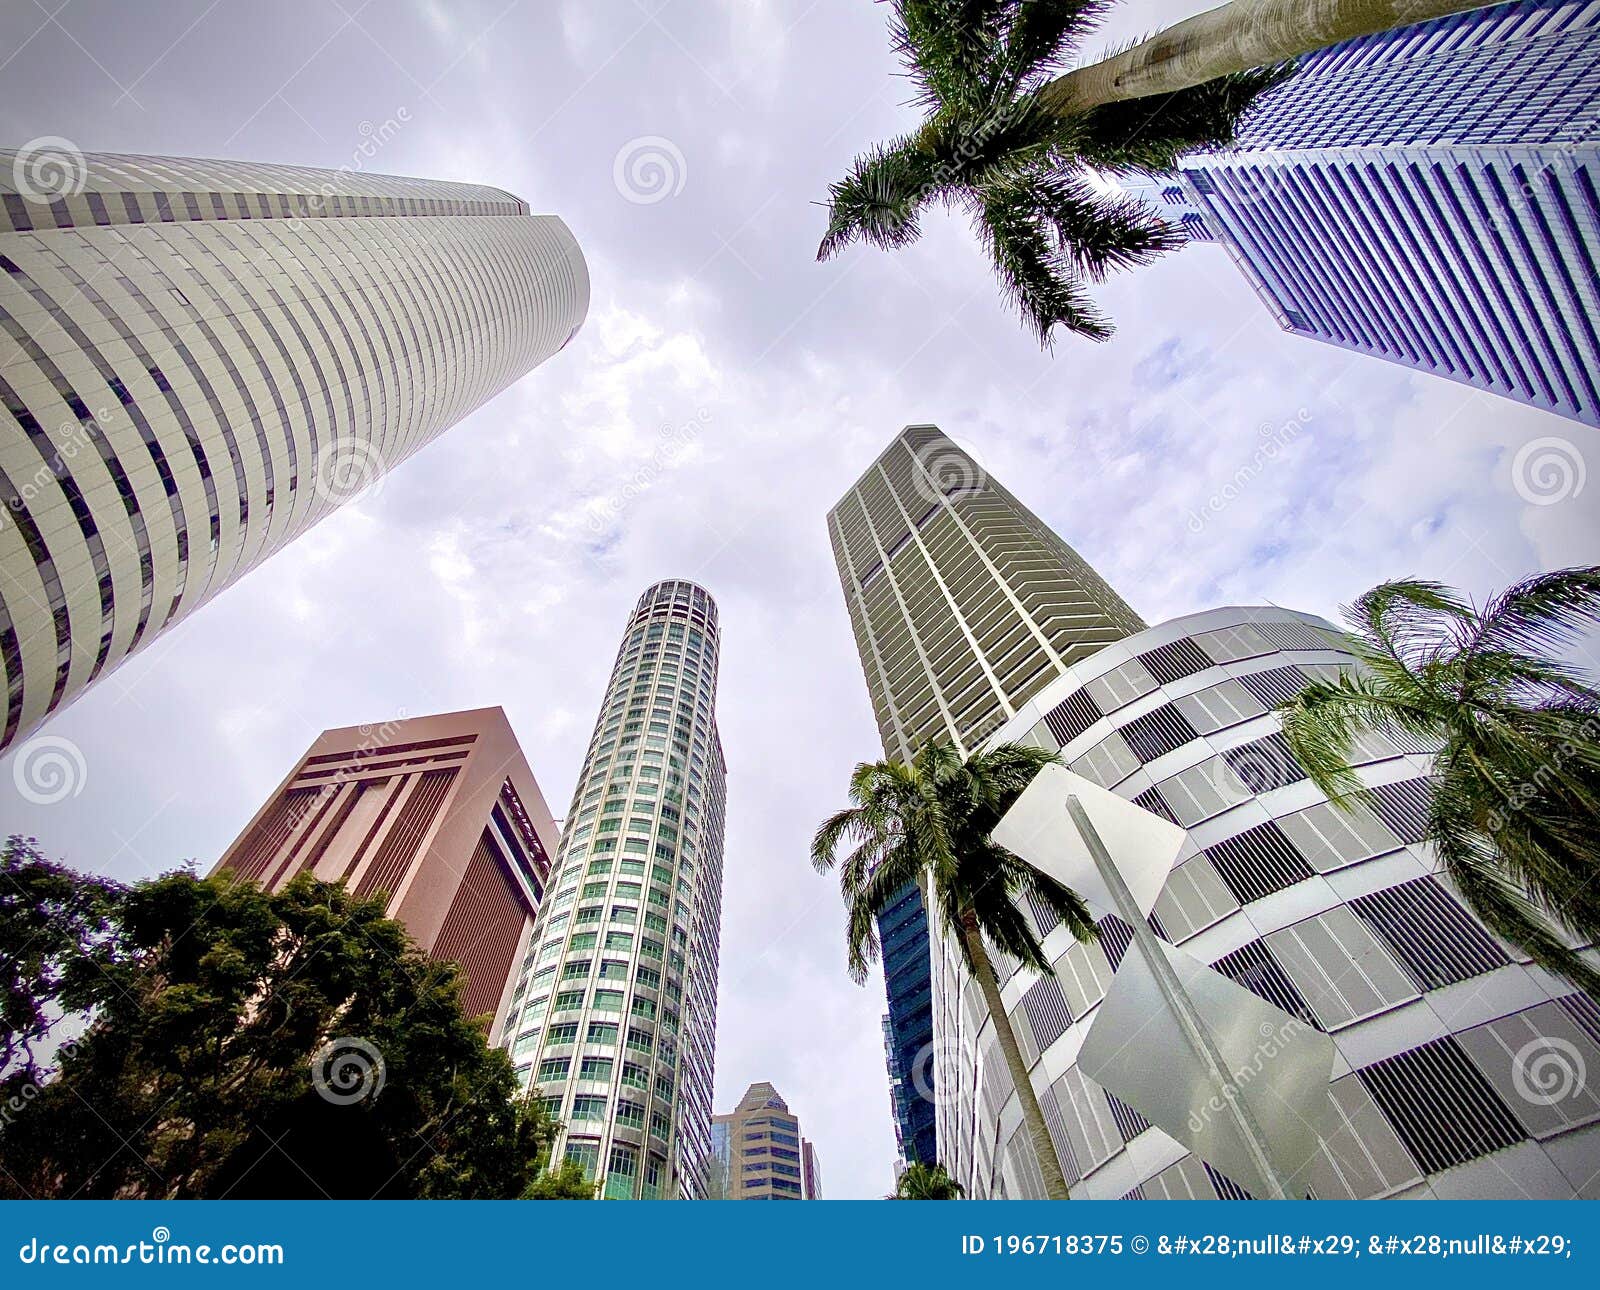 architecture- business tower, fisheye lens effect. international plaza, maxwells road, singapore. 15. september 2020.